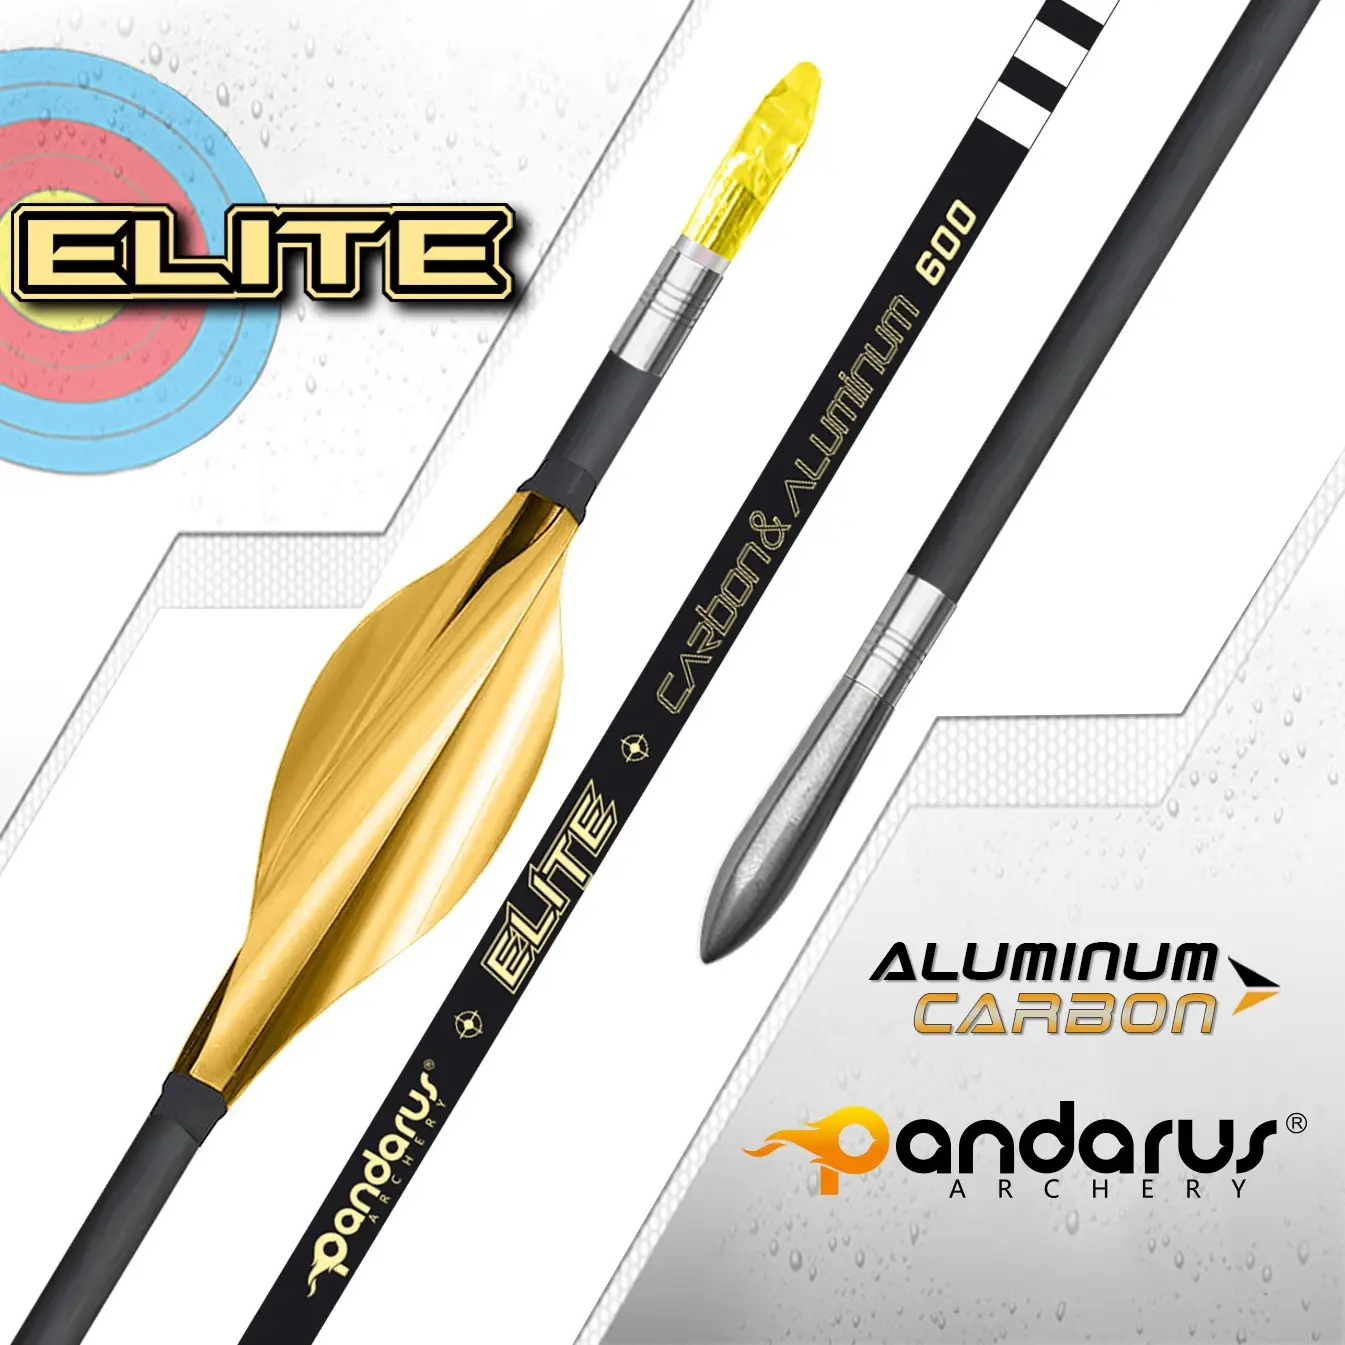 Pandarus Elite X10 ID0.125" 3.2mm Aluminum carbon composited arrow shaft for Archery target arrow shooting